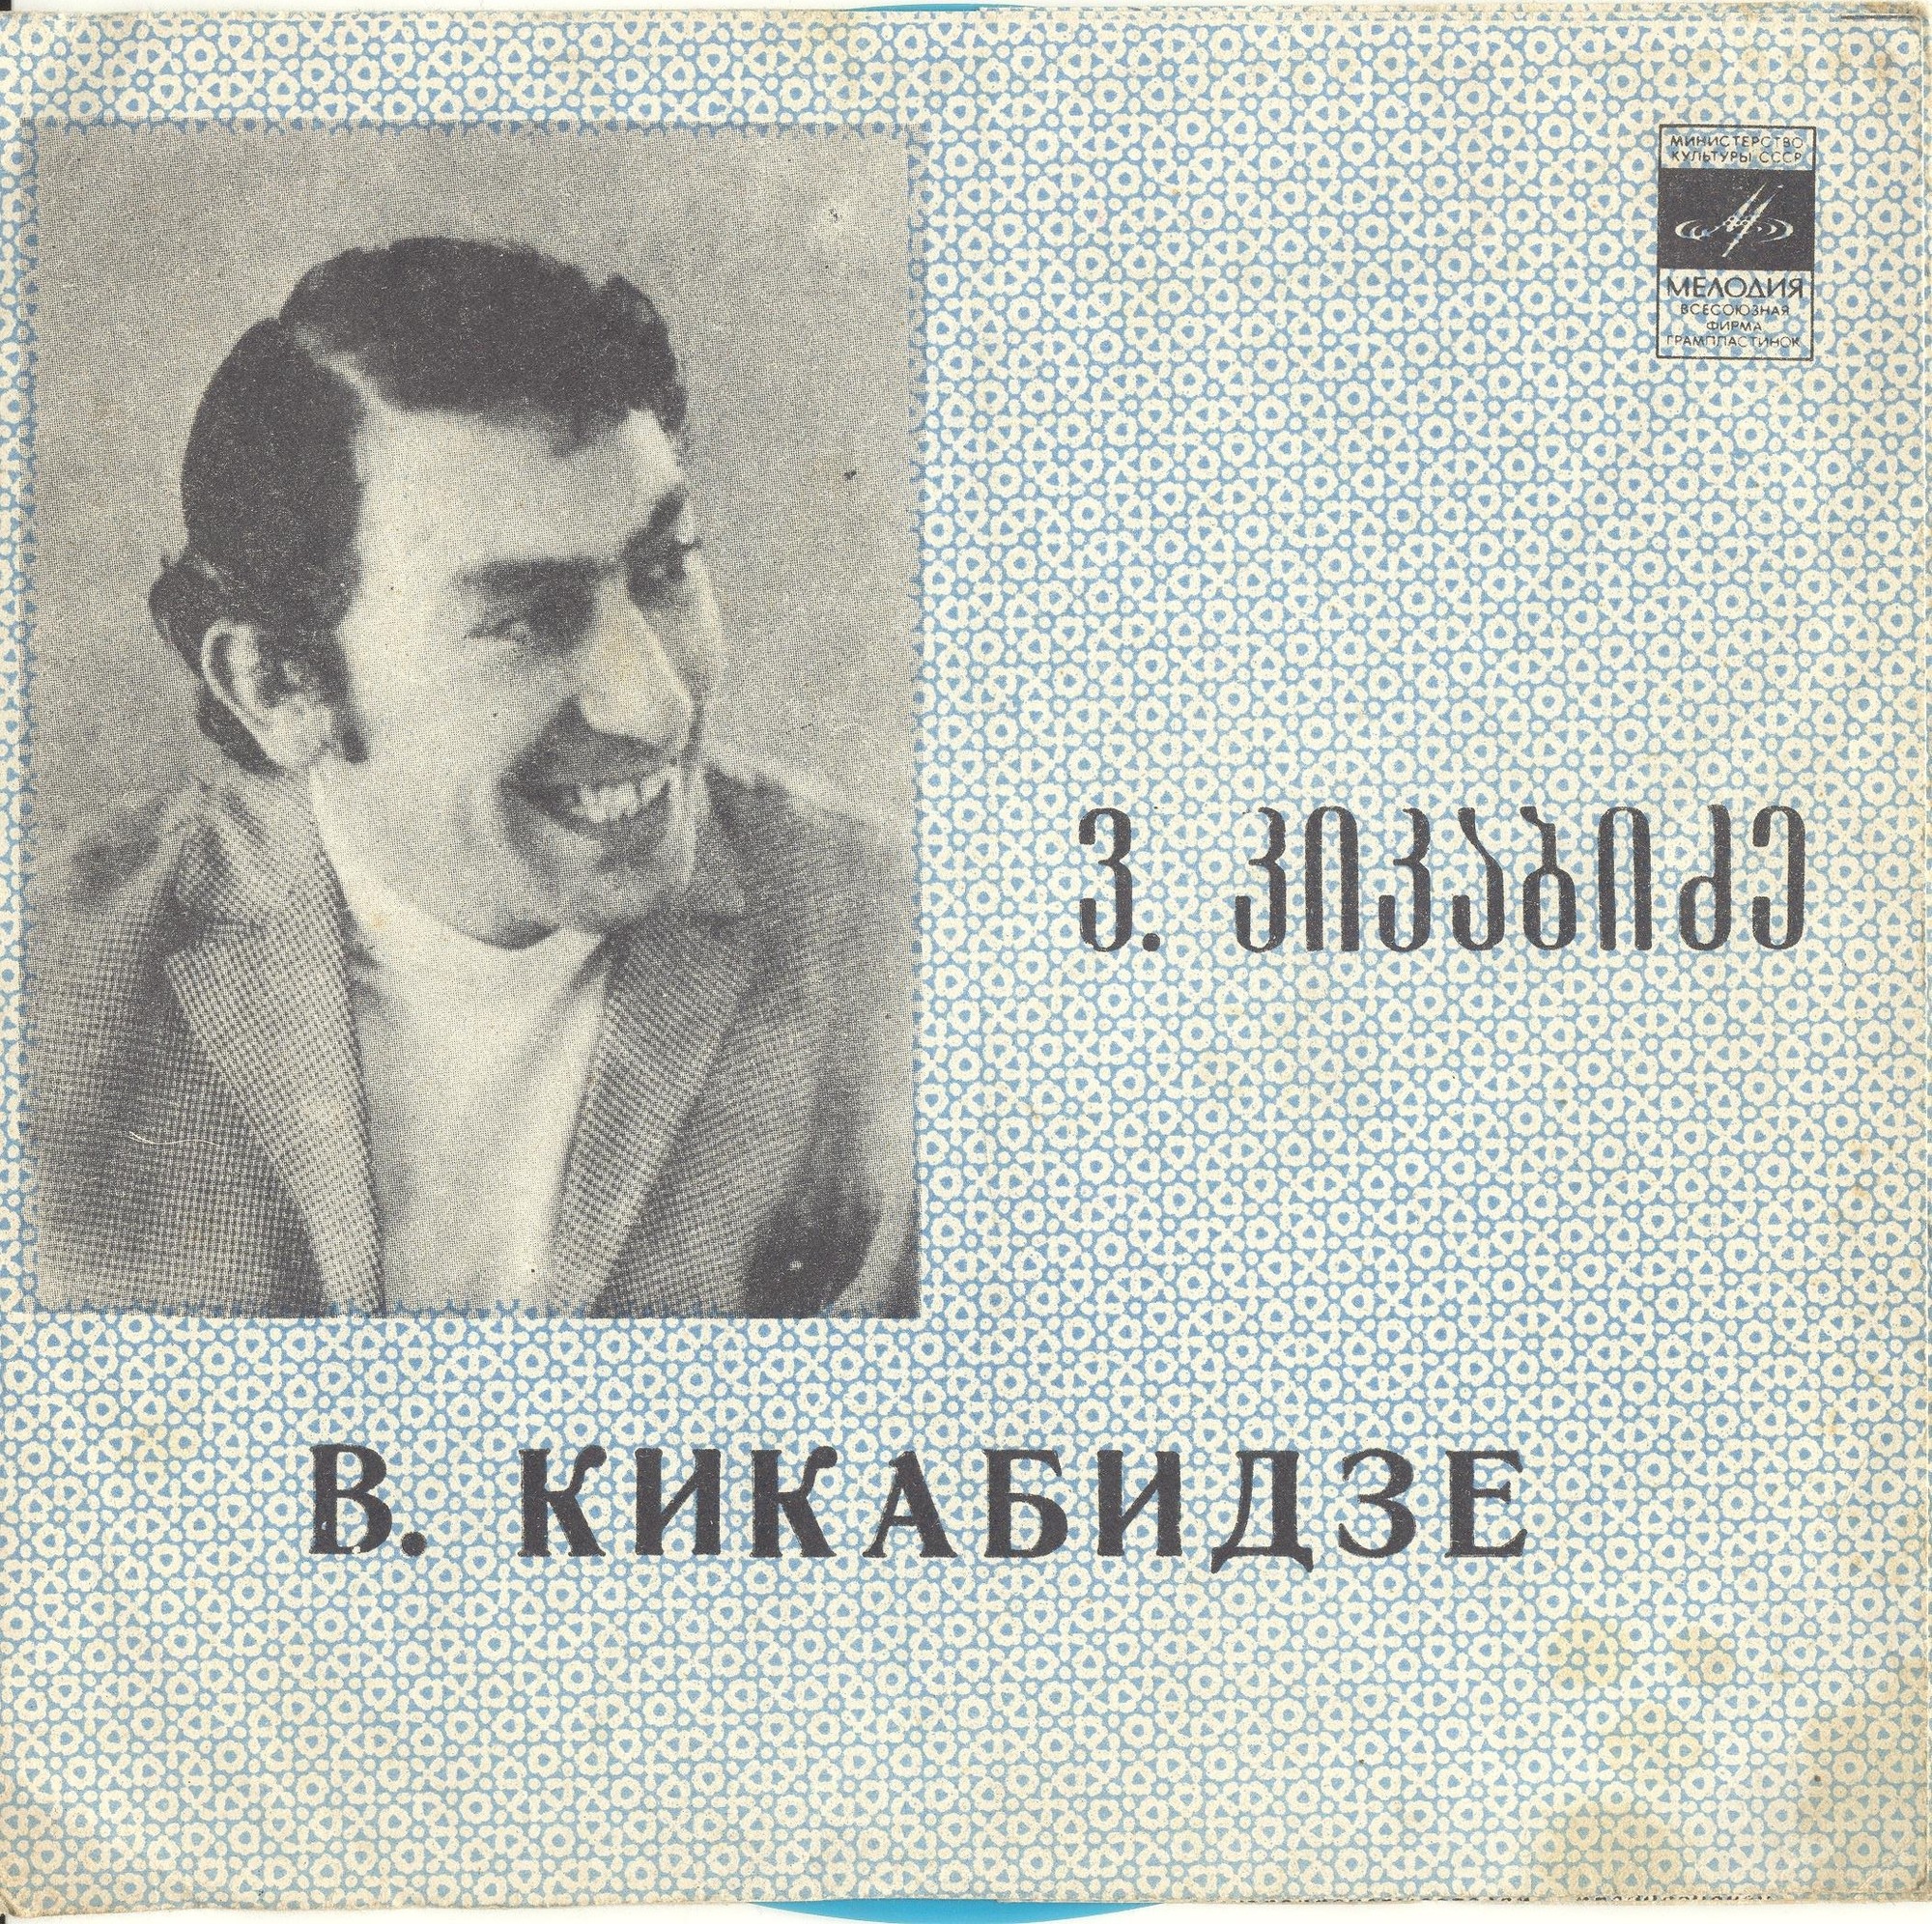 Поёт Вахтанг Кикабидзе